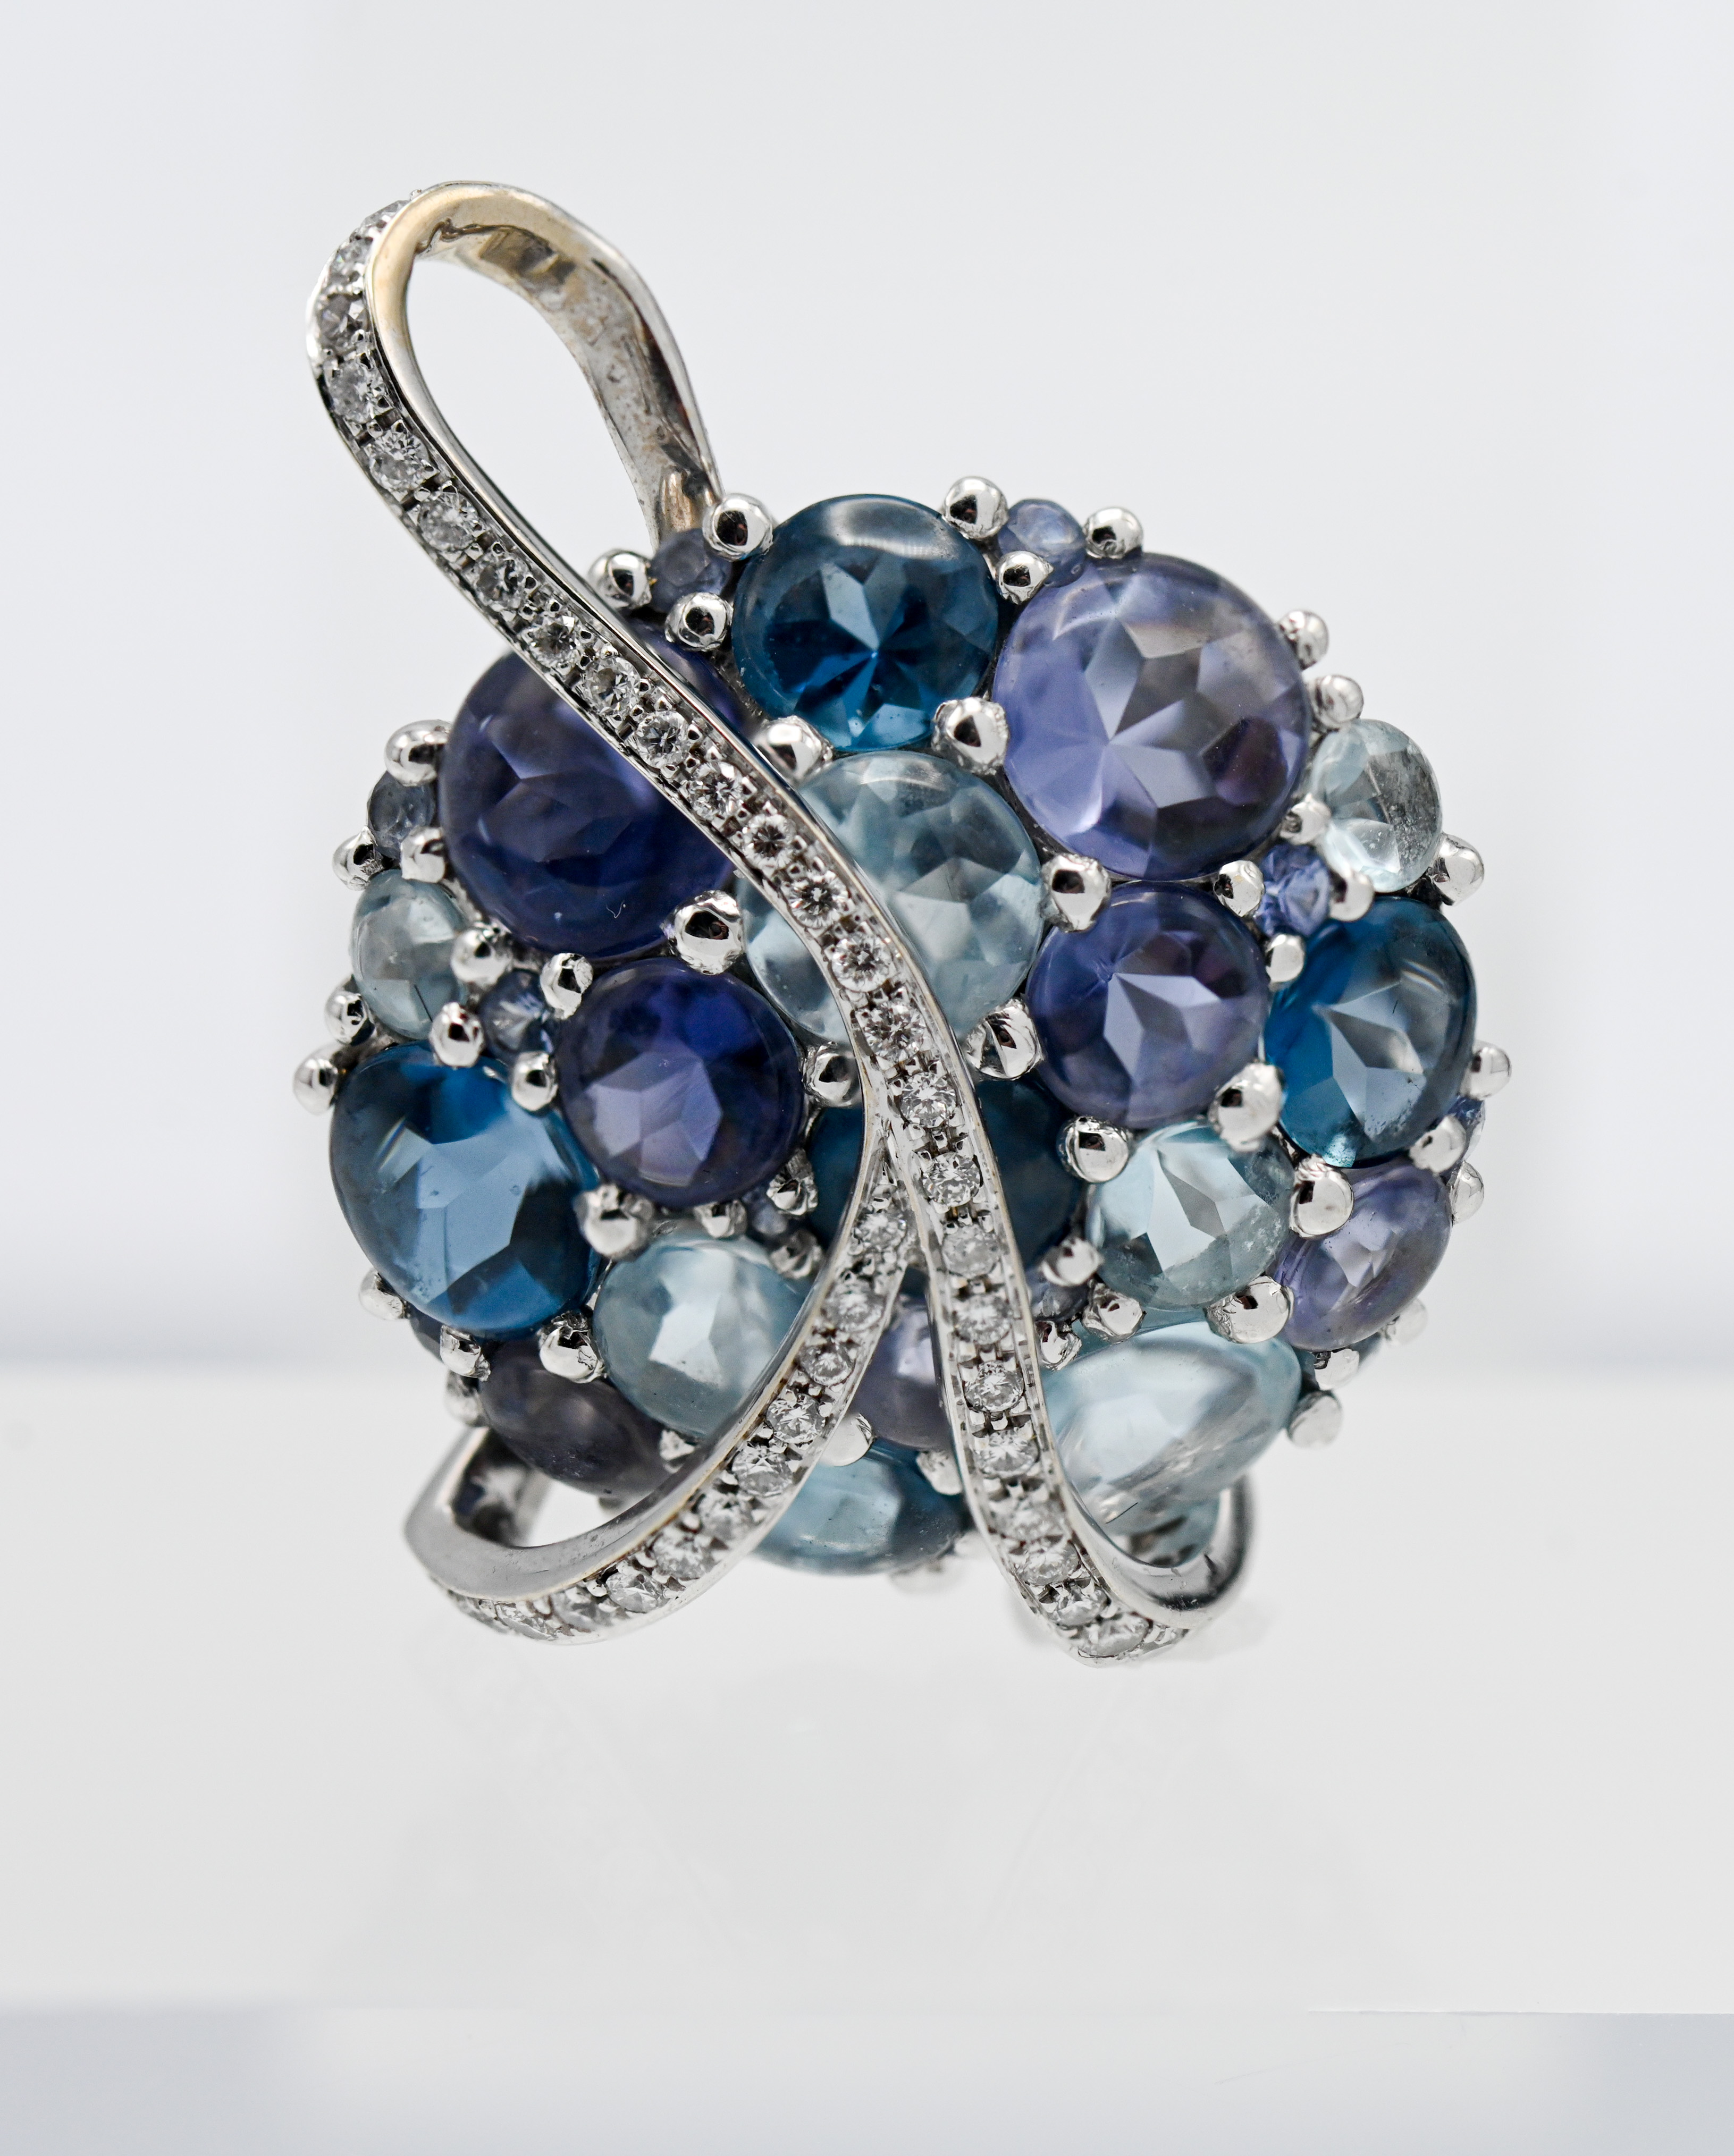 An impressive Tanzanite, Topaz, Aquamarine and Diamond pendant, set in 18ct white gold.